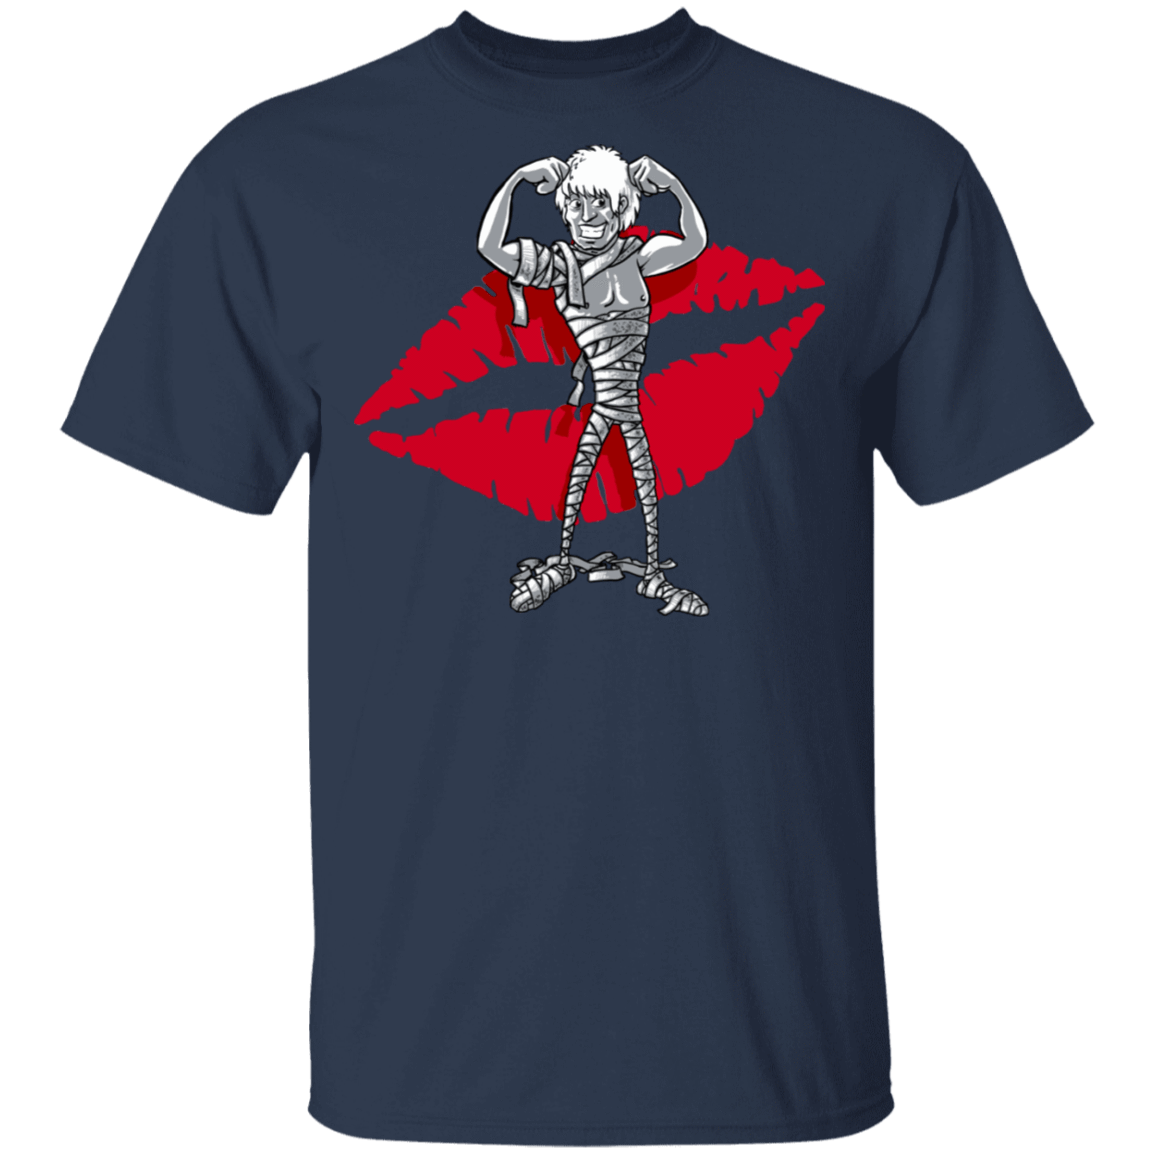 T-Shirts Navy / S RHPS Toonz Rocky T-Shirt